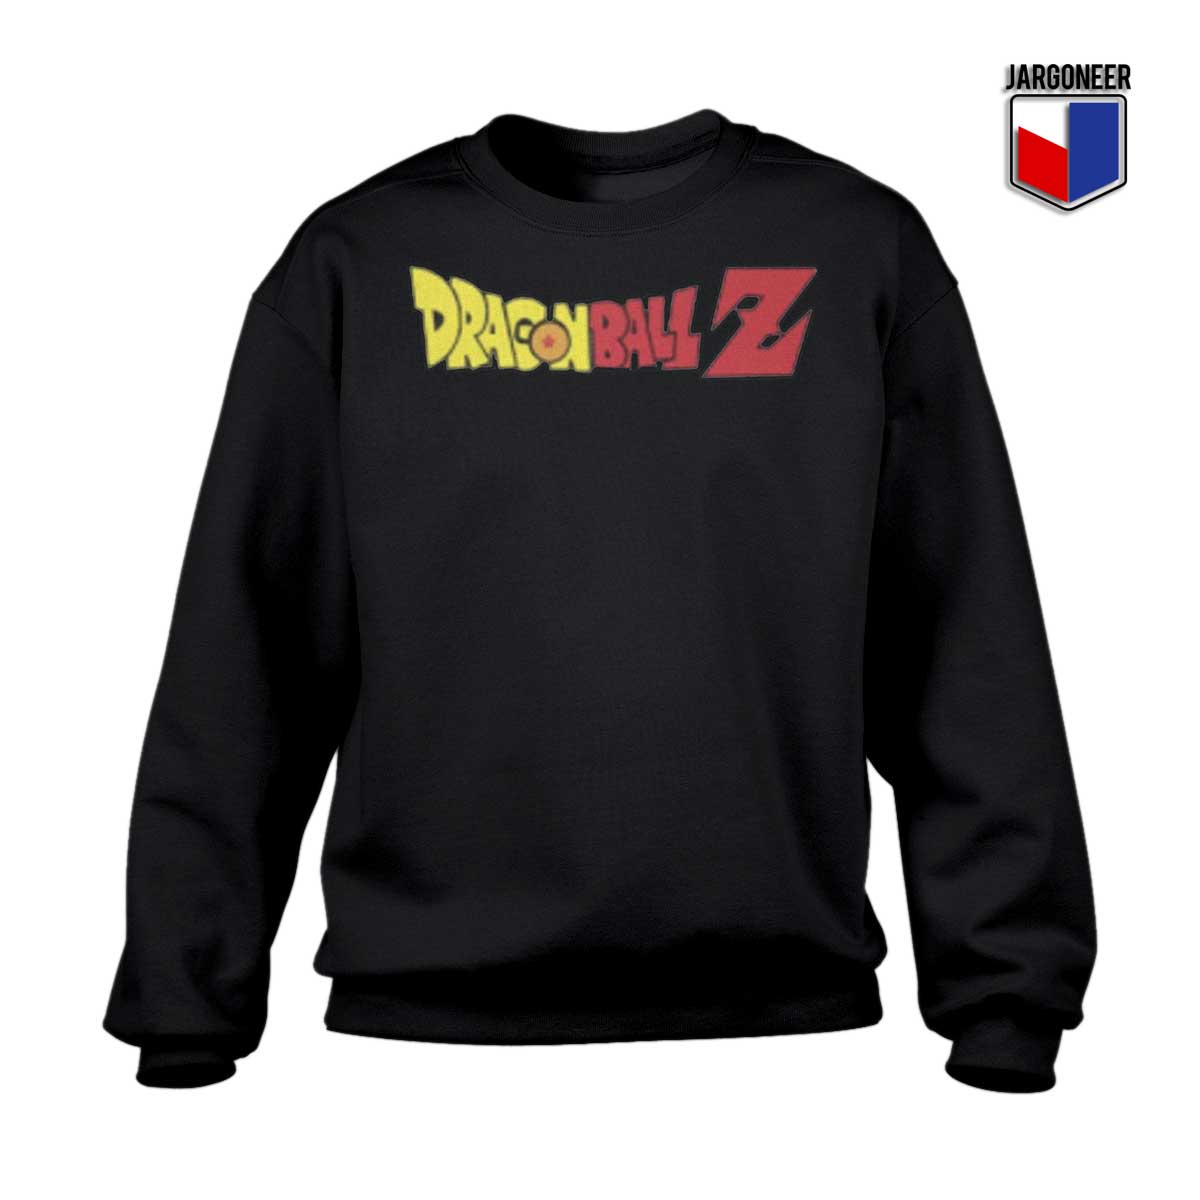 DragonBall Z Logo Sweatshirt - Shop Unique Graphic Cool Shirt Designs